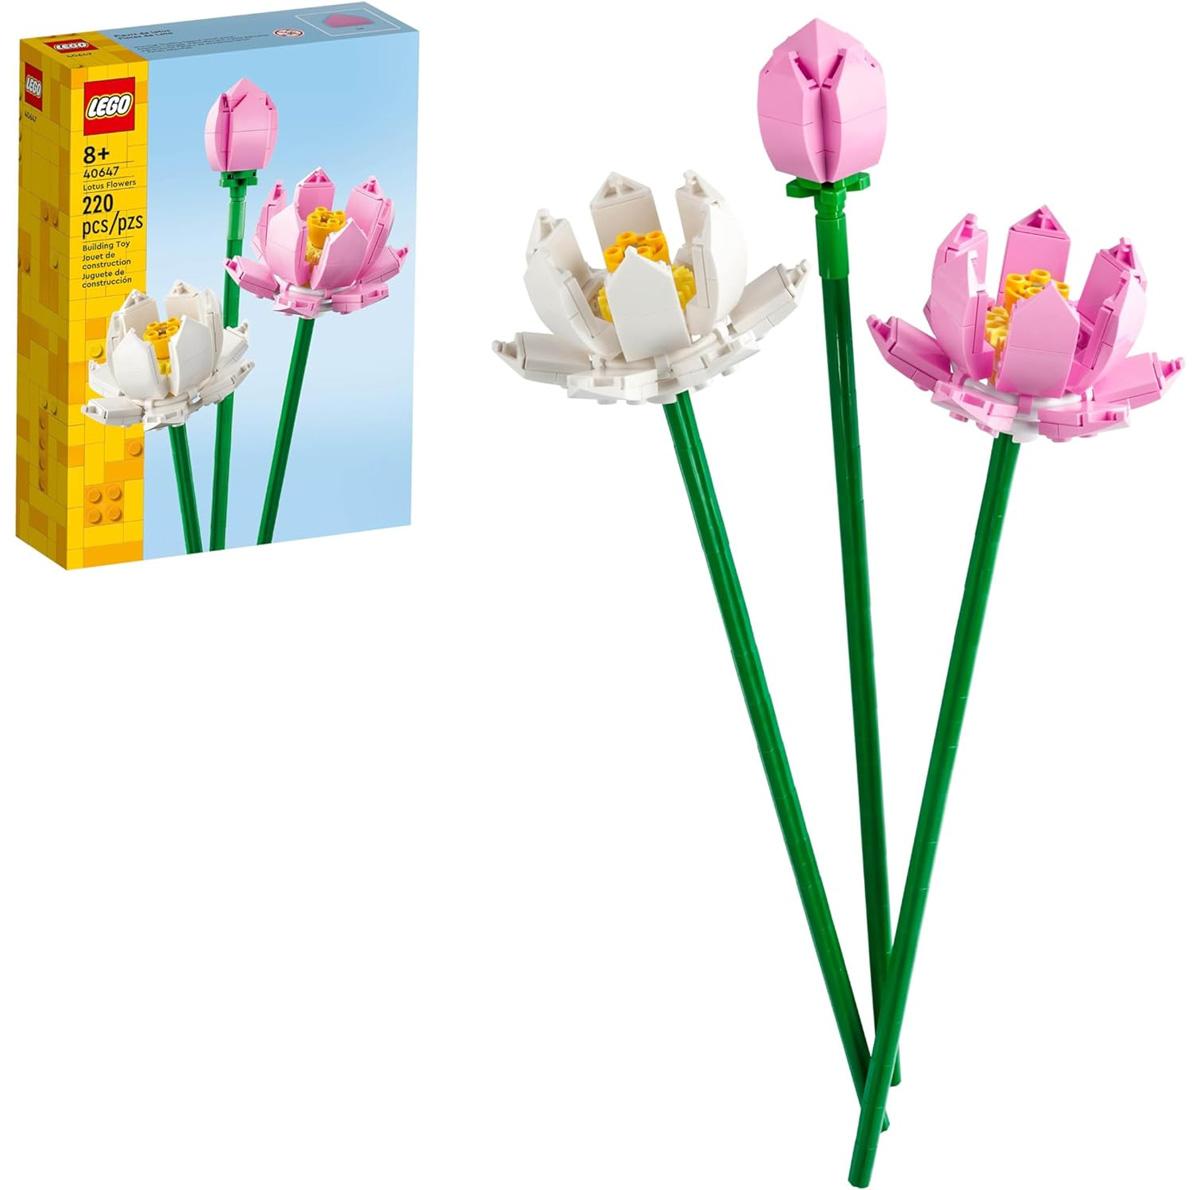 Lego Lotus Flowers Building Kit 40647 for $9.59